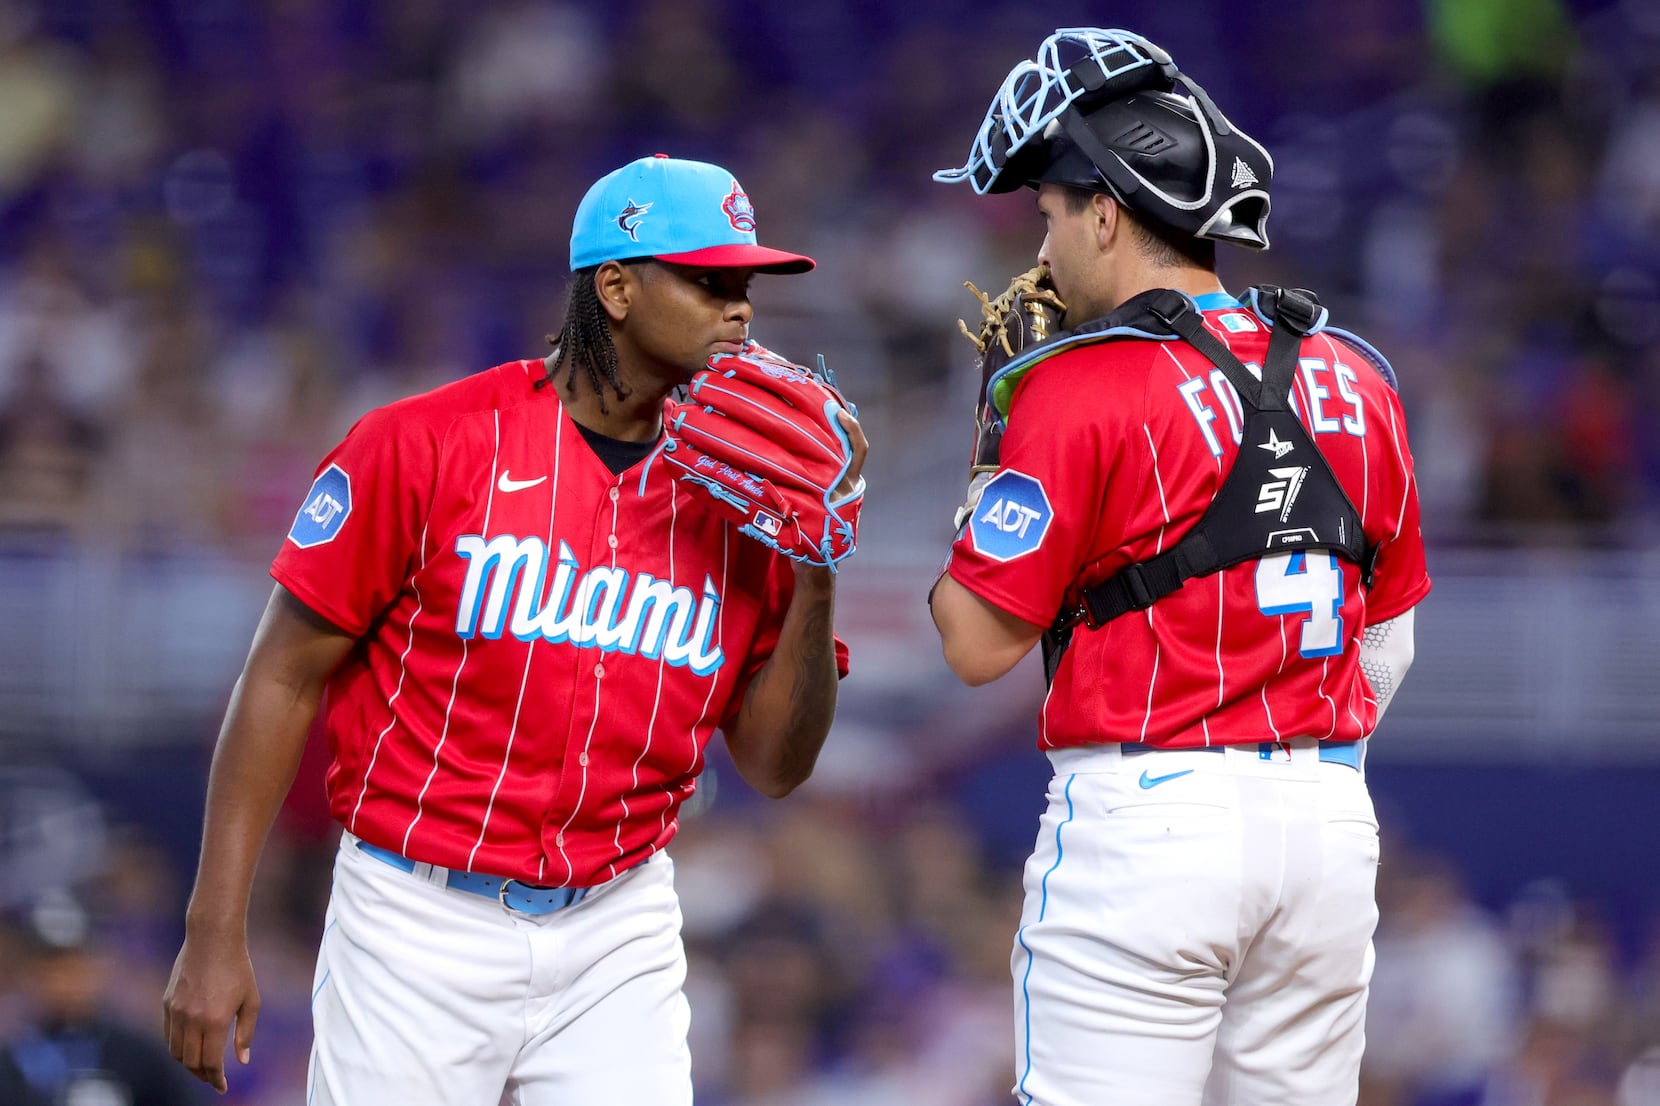 MLB City Connect uniforms: Where do Dodgers' uniforms rank among